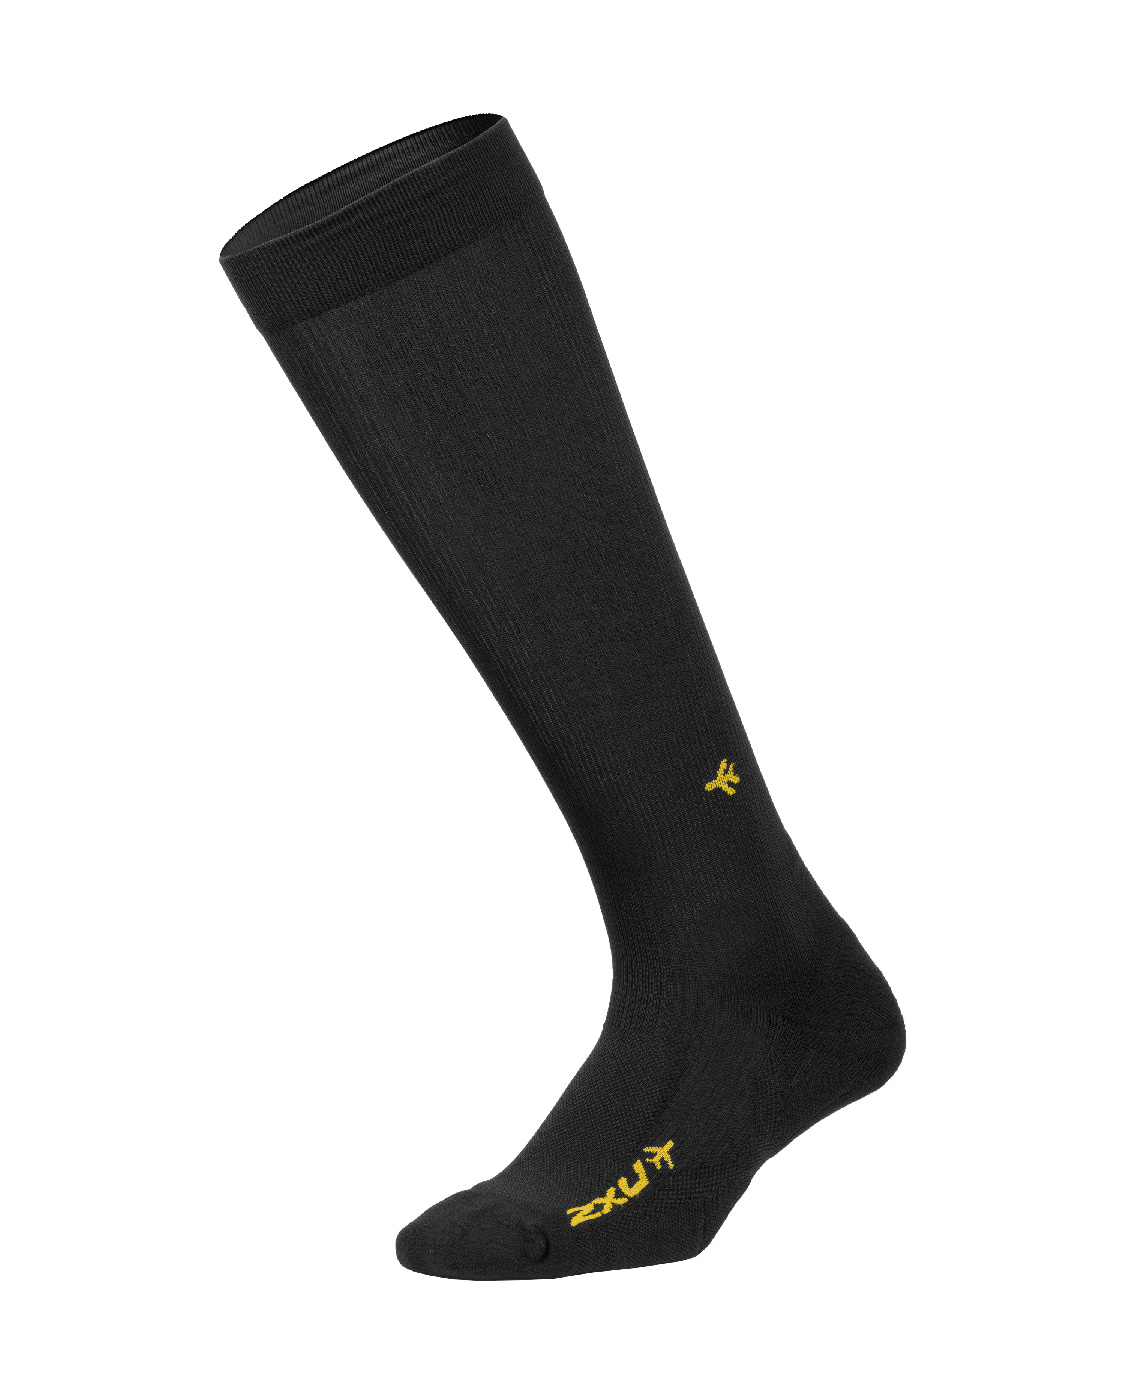 2XU Unisex Flight Comp Socks - Black/Black